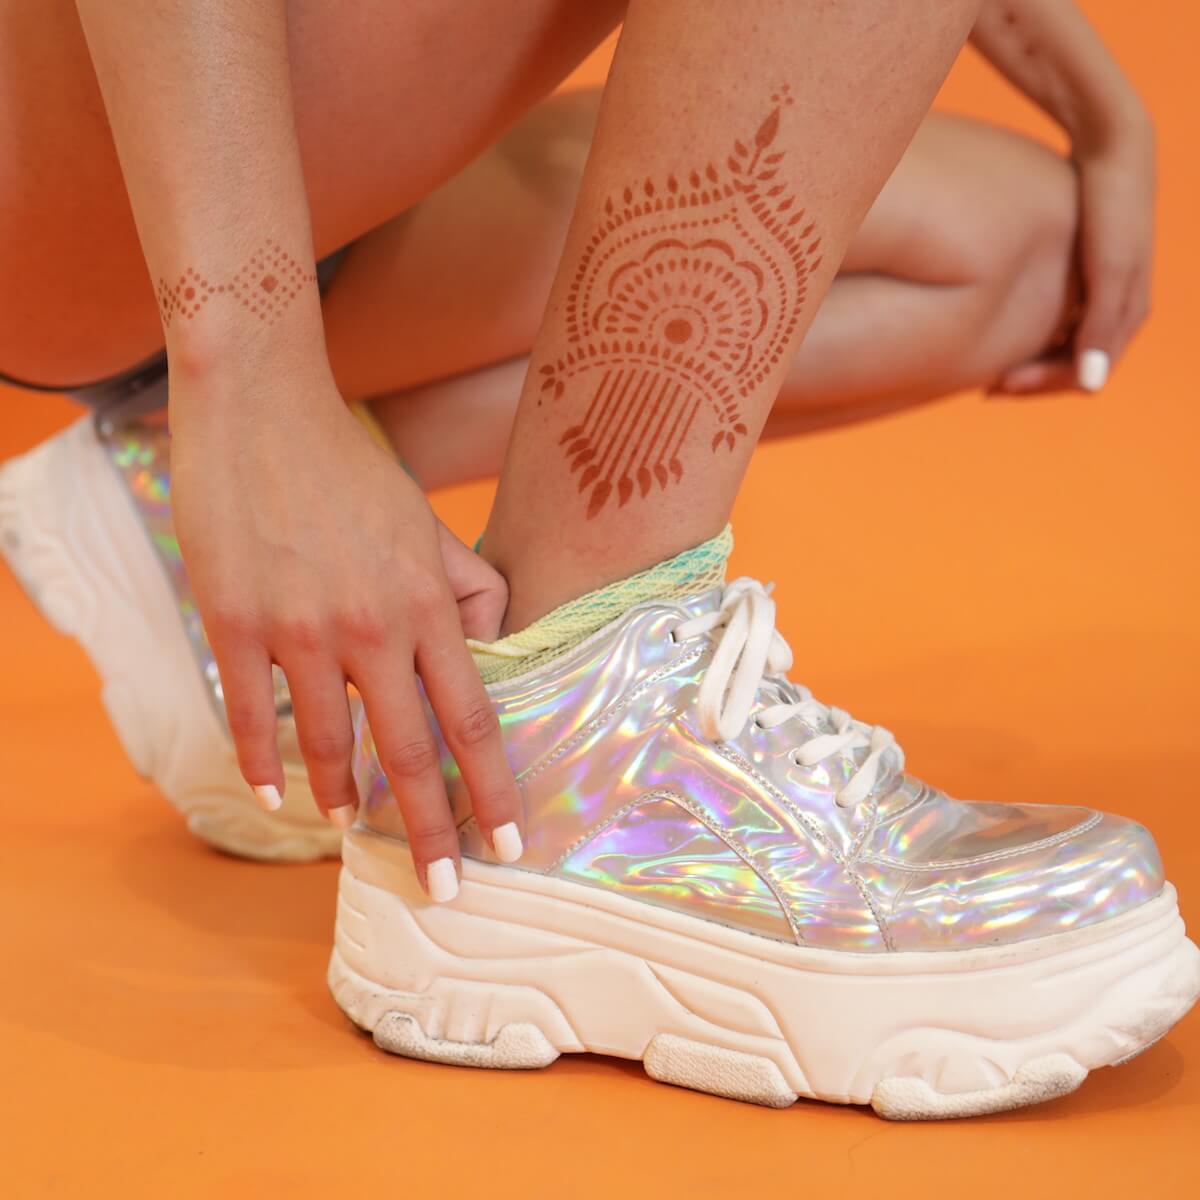 Fierce - DIY tribal henna design on ankle